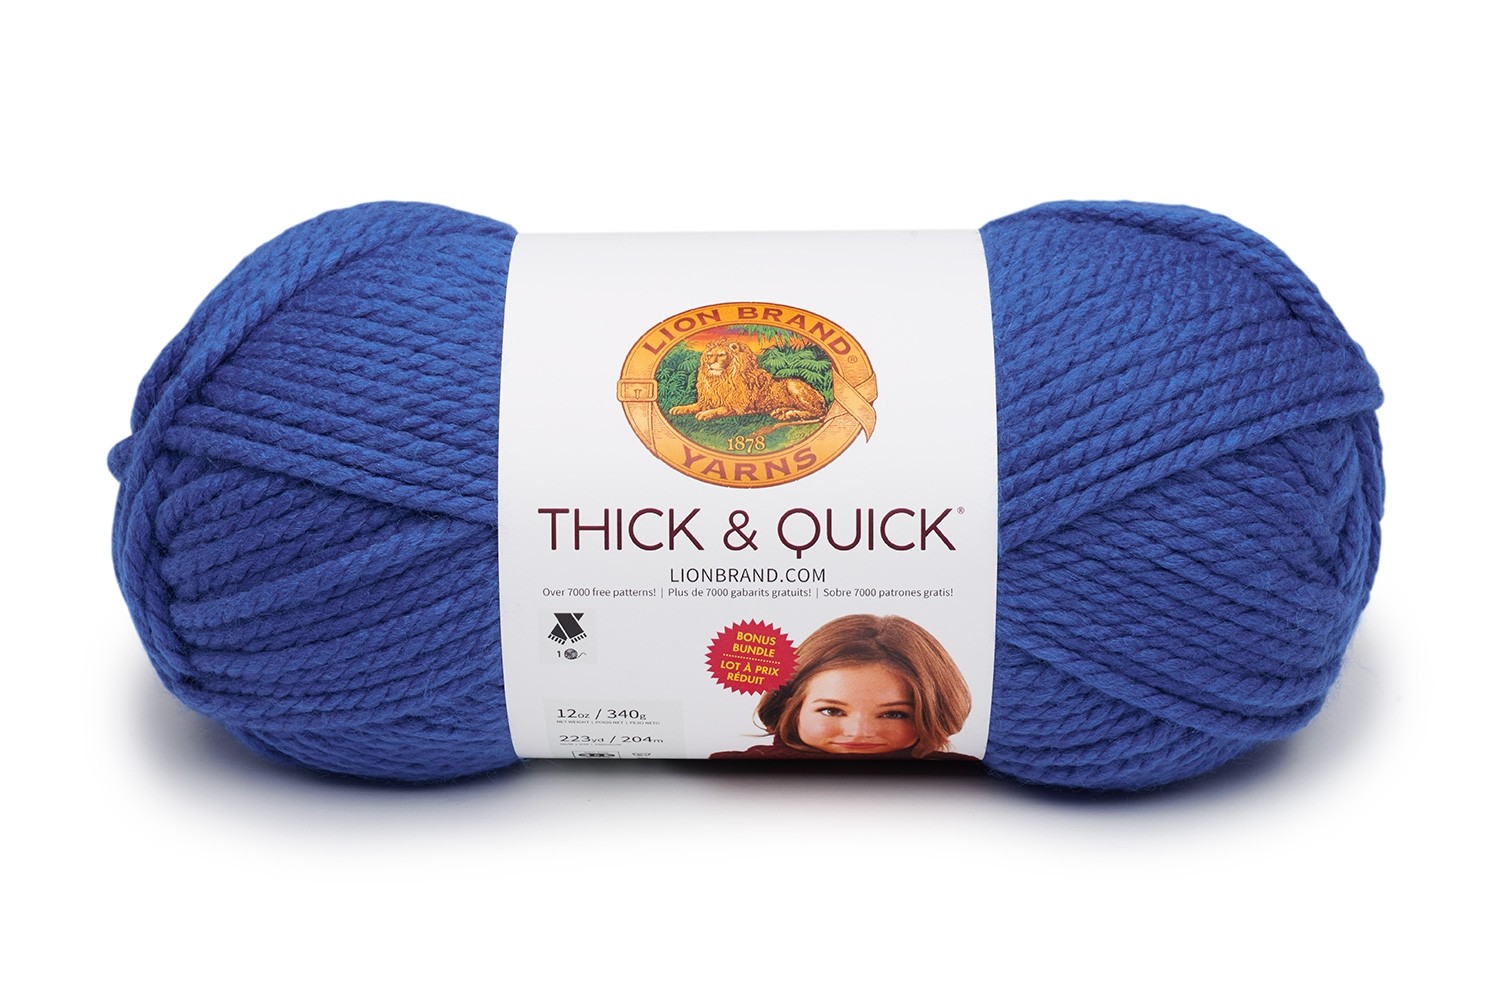 Thick & Quick: Now in Bonus Bundles!